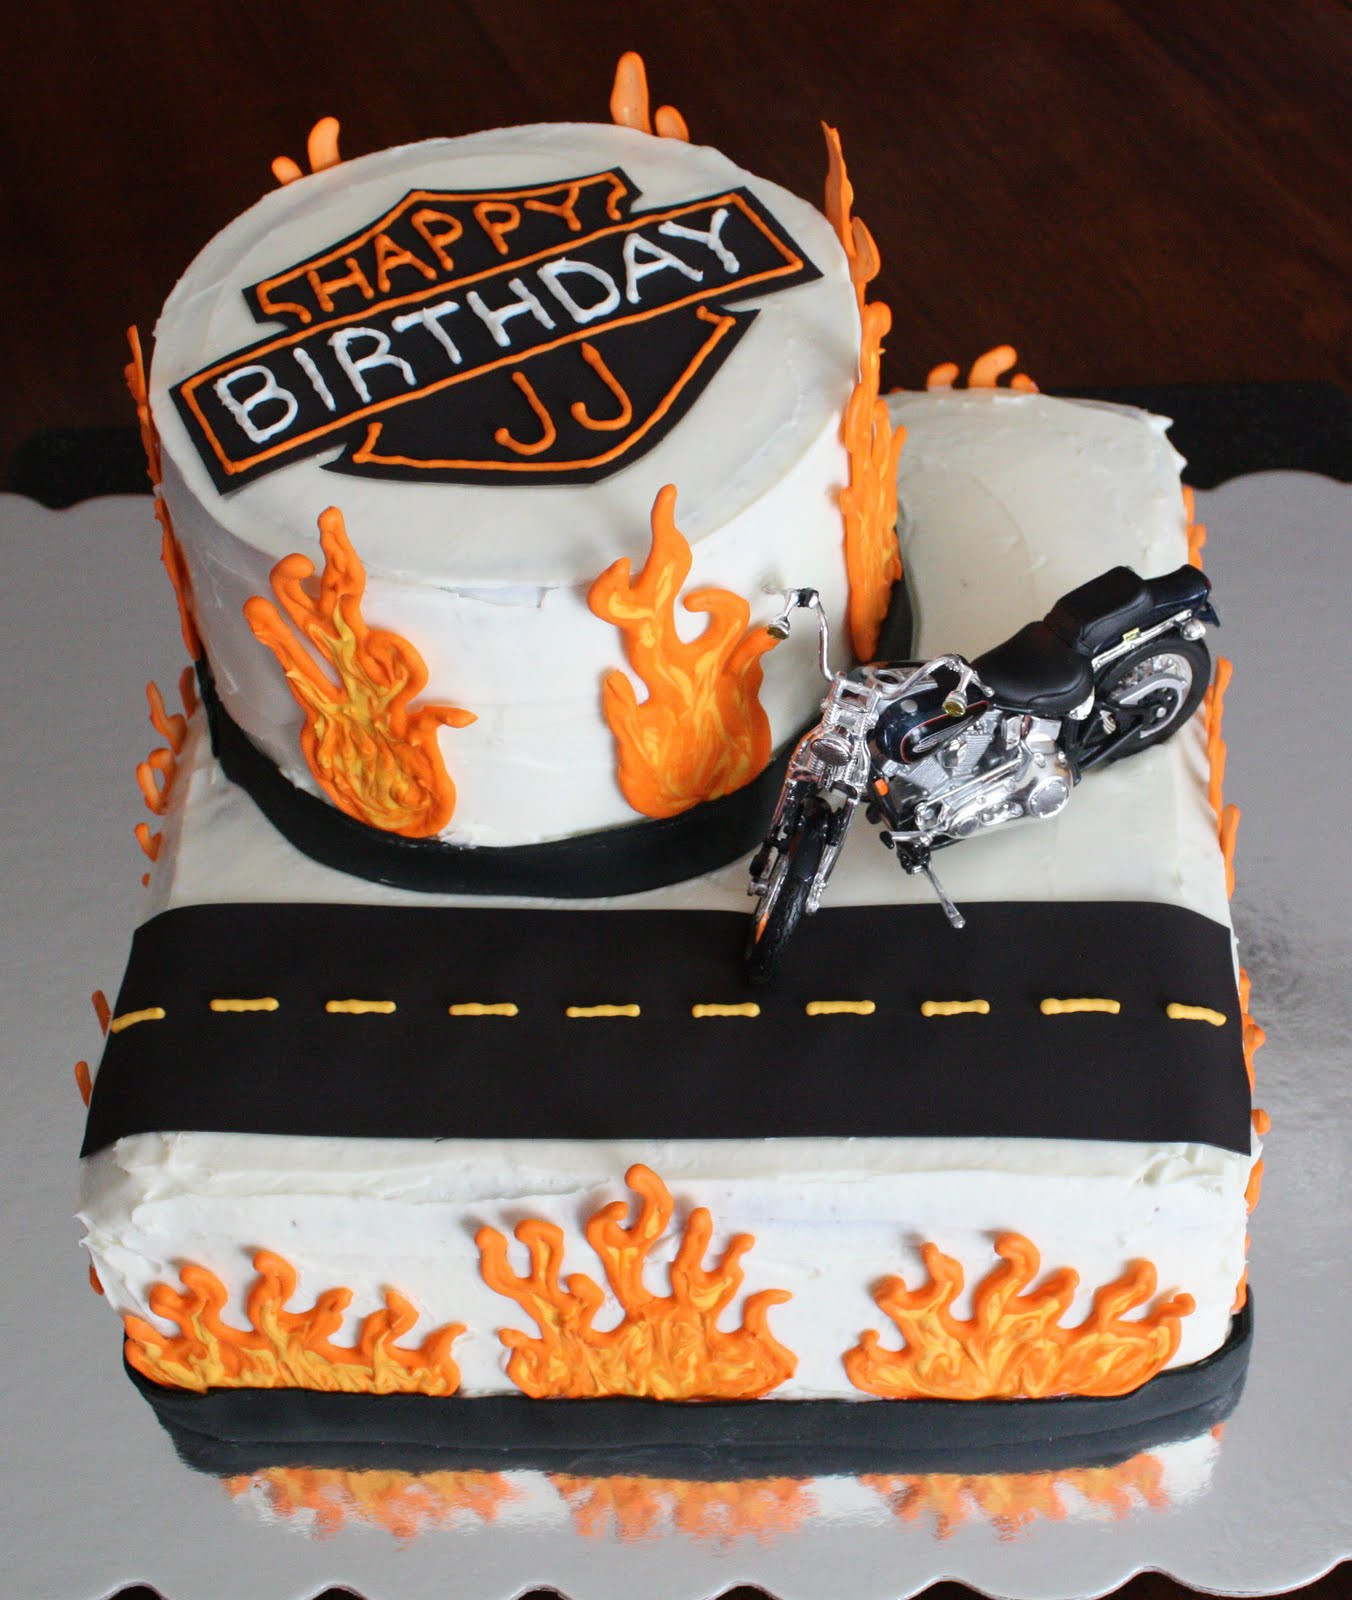 Harley Davidson Birthday Cake
 Straight to Cake Harley Davidson Cake